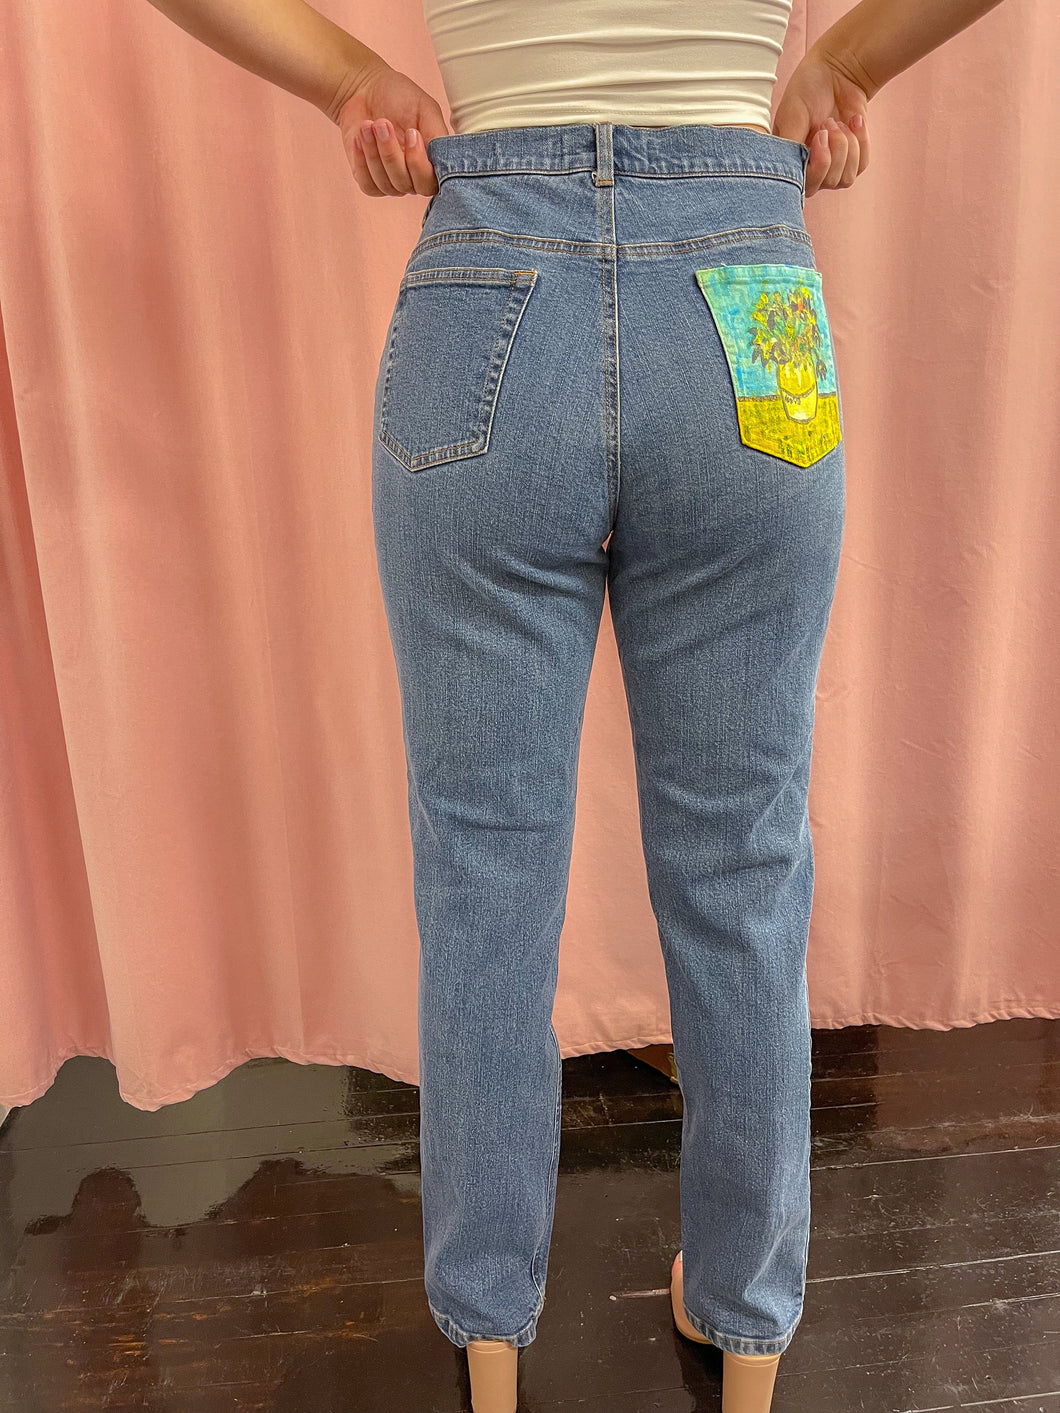 Isabelle Renee Art x GB- Flower Pot Jeans